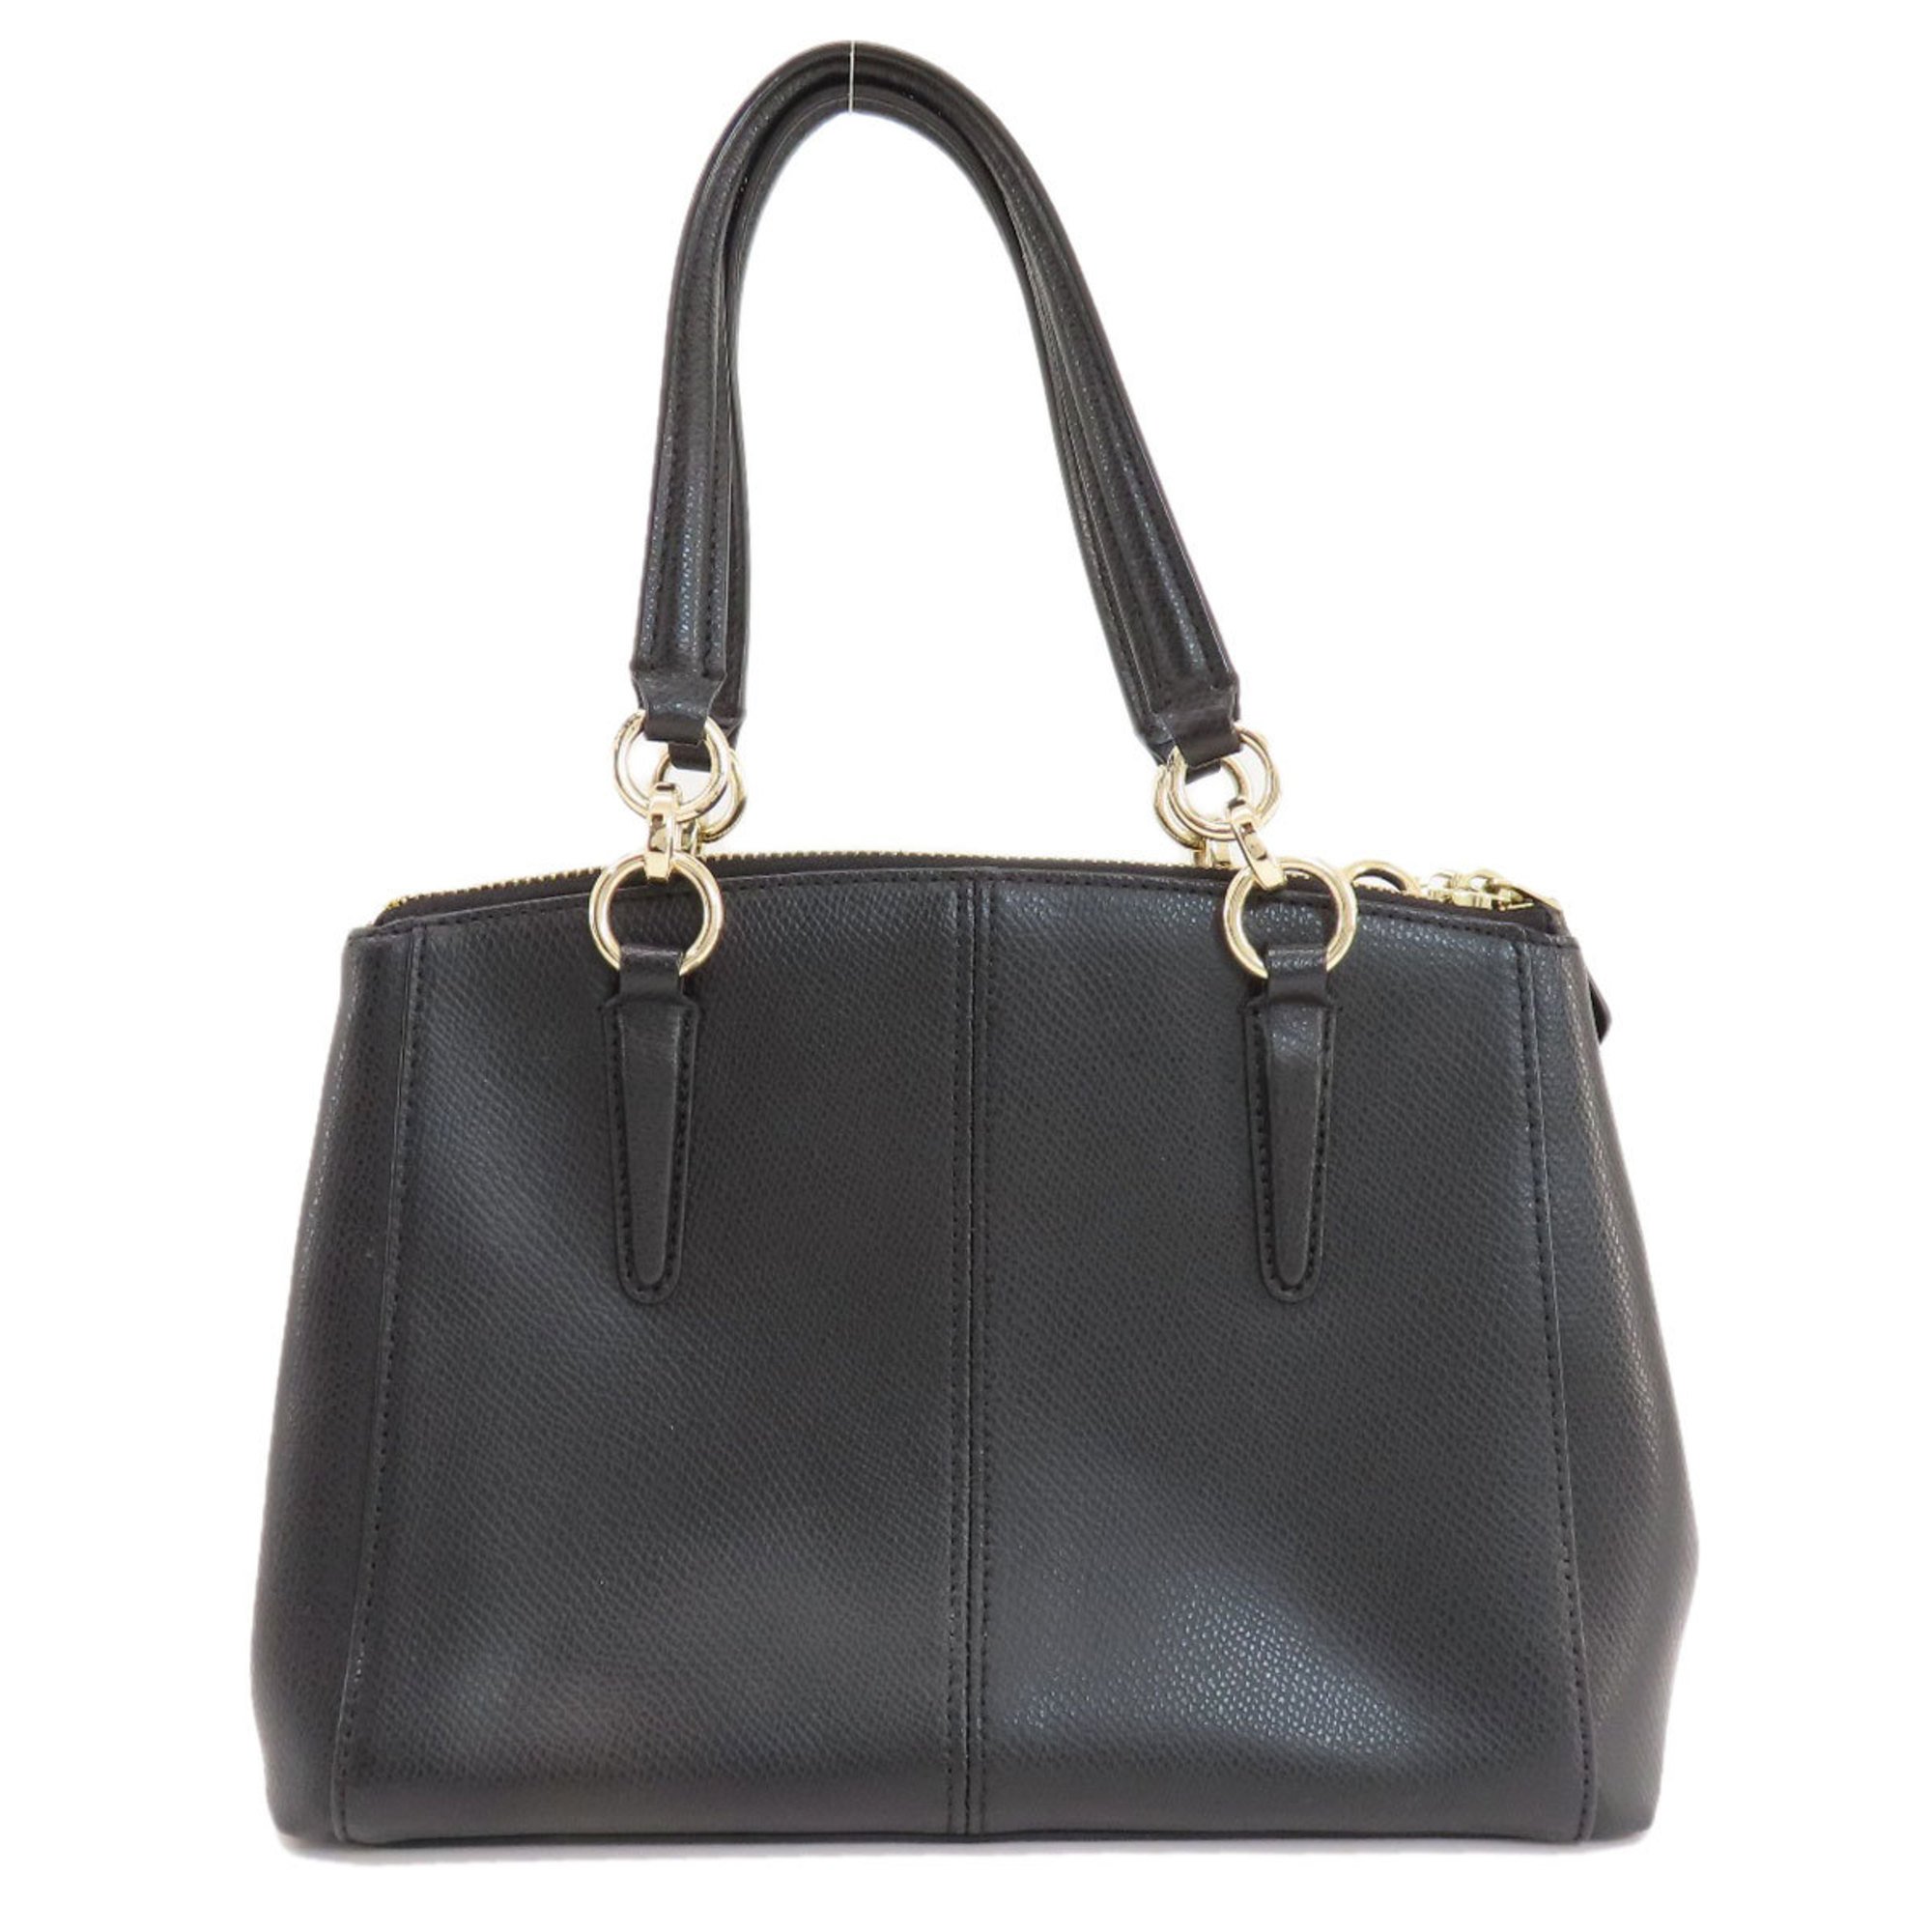 Coach F36704 metal fittings handbag for women